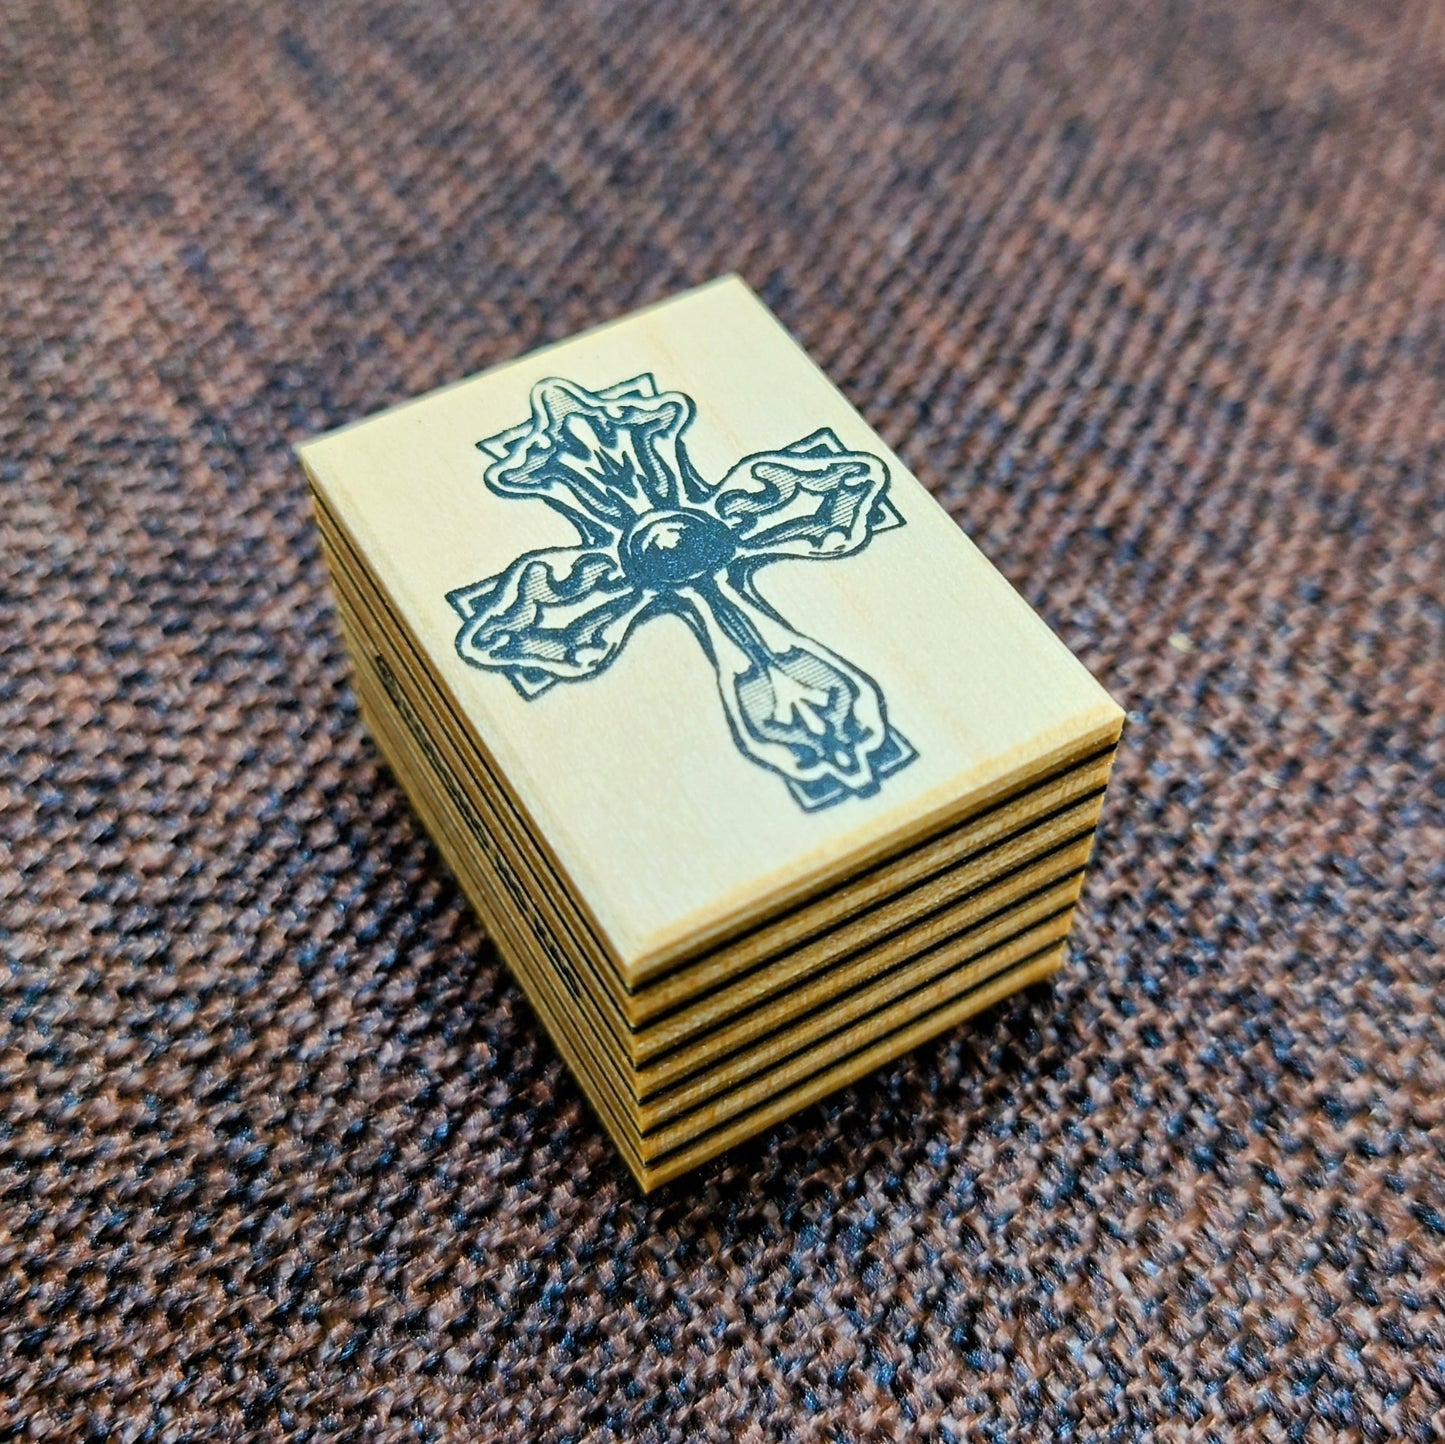 The Stamp series 十字架